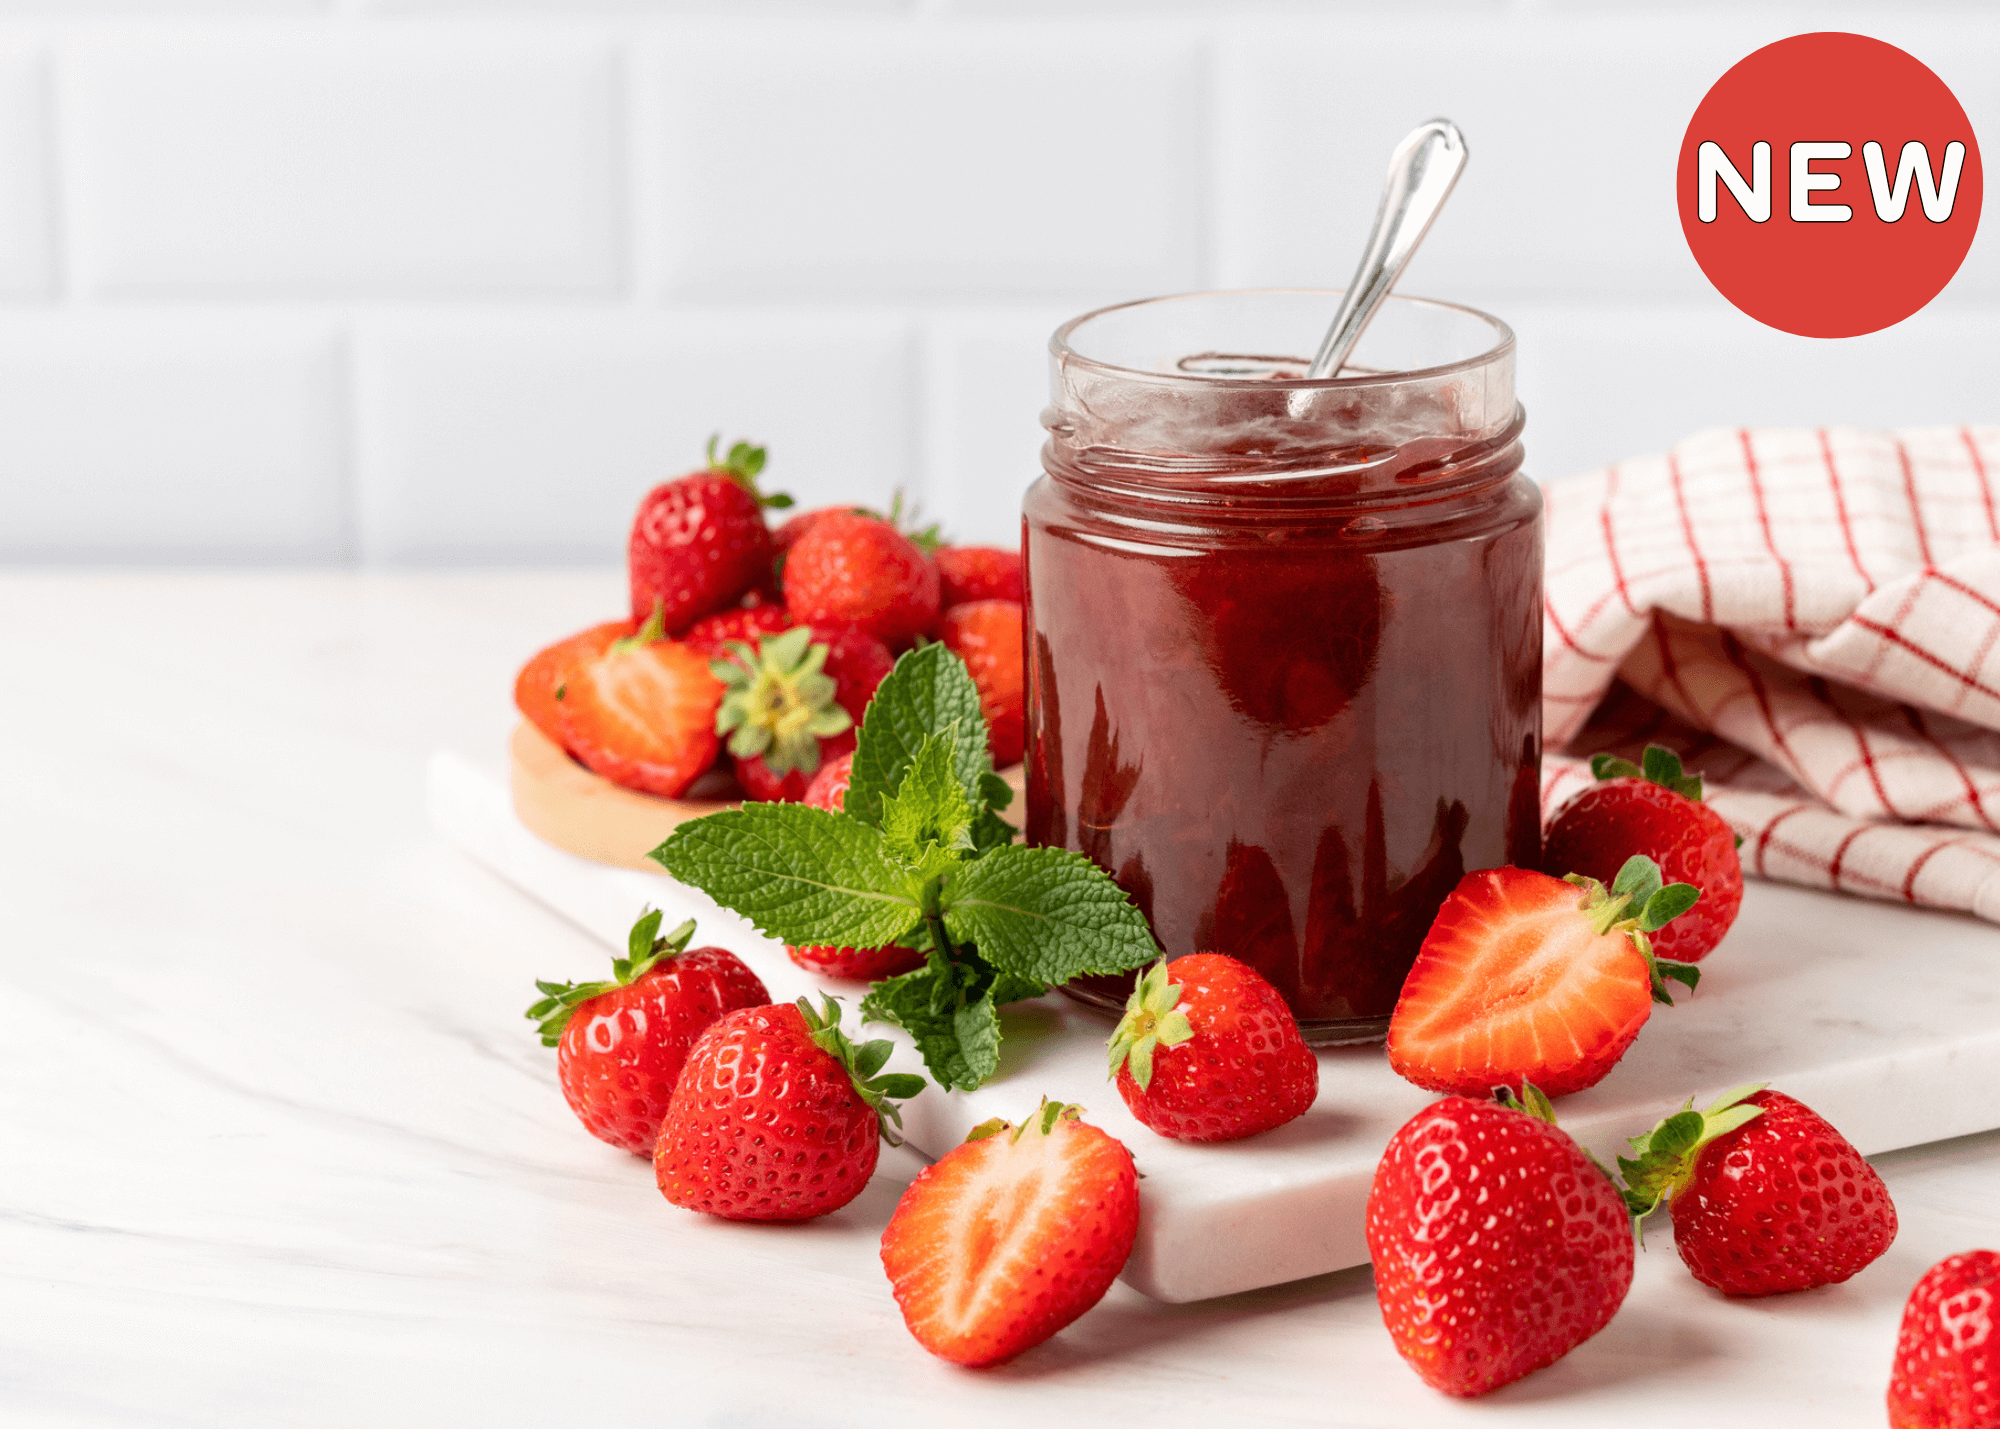 DIY - Driscoll's Sweetest Batch Strawberry Jam Kit